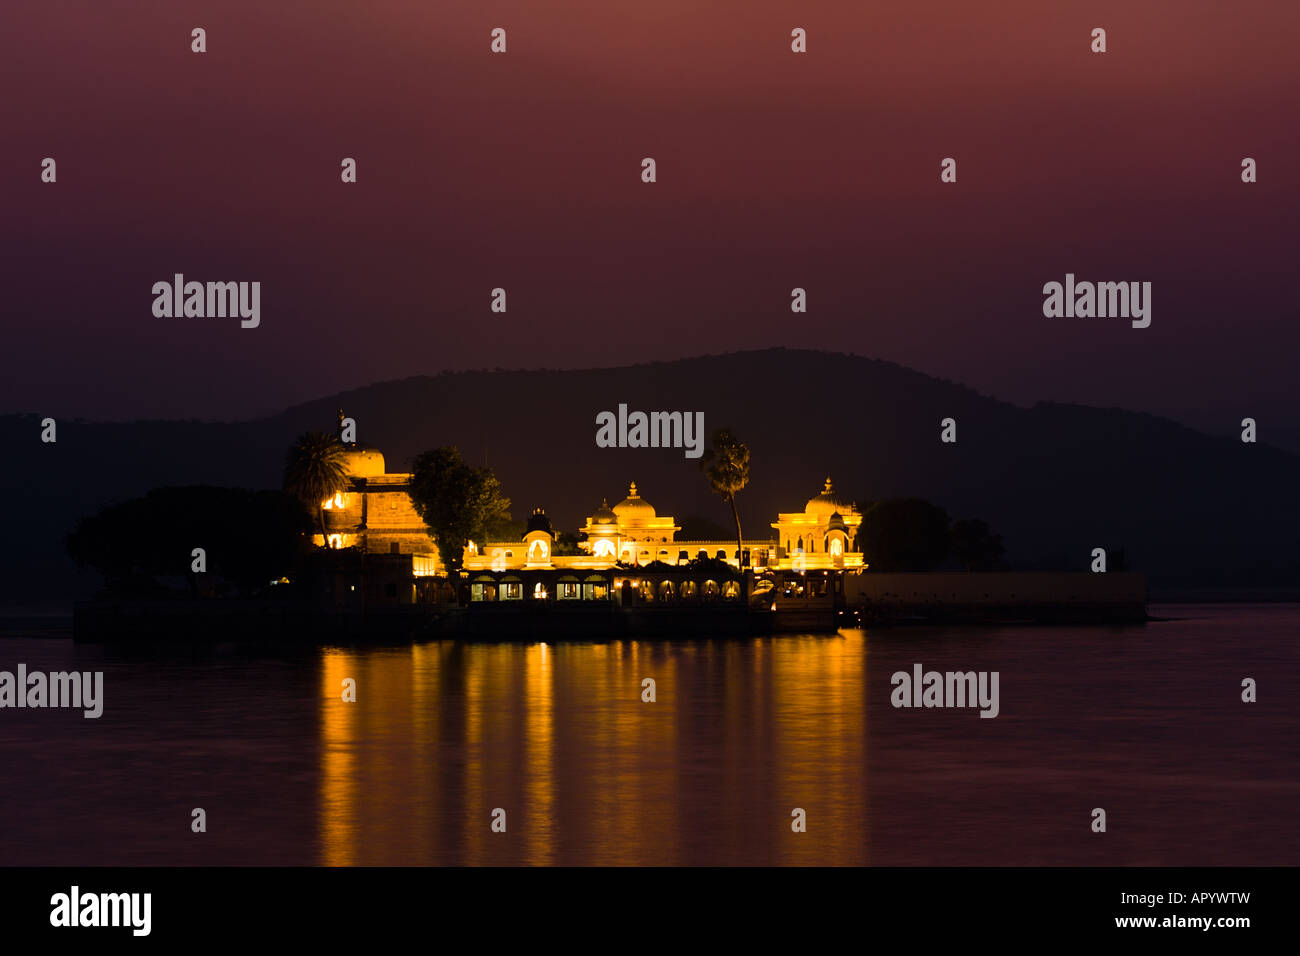 Nachtansicht des Lake Palace Insel des Jagmandir am Pichola-See - Udaipur, Rajasthan, Indien Stockfoto